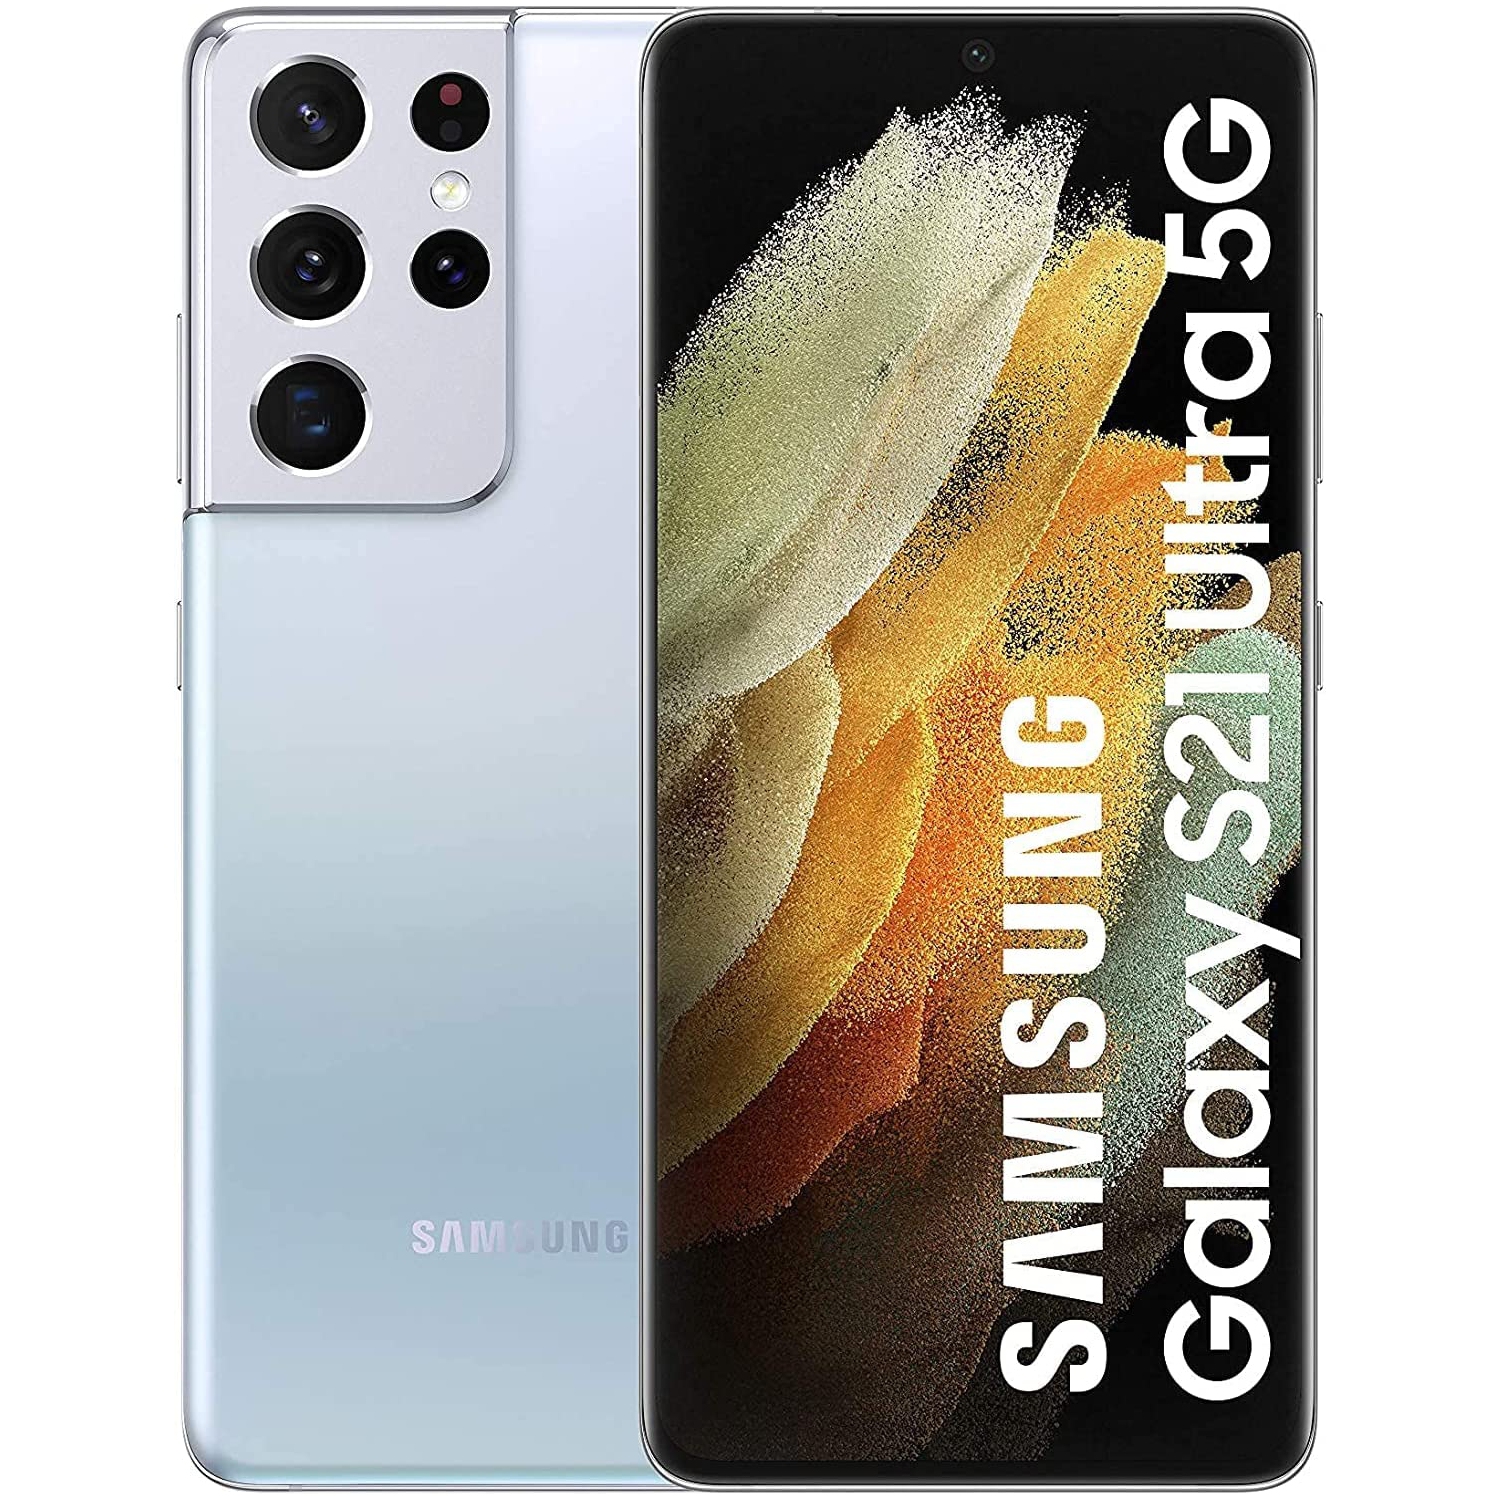 Samsung Galaxy S21 Ultra 5G 128GB - Silver - Unlocked - Open Box